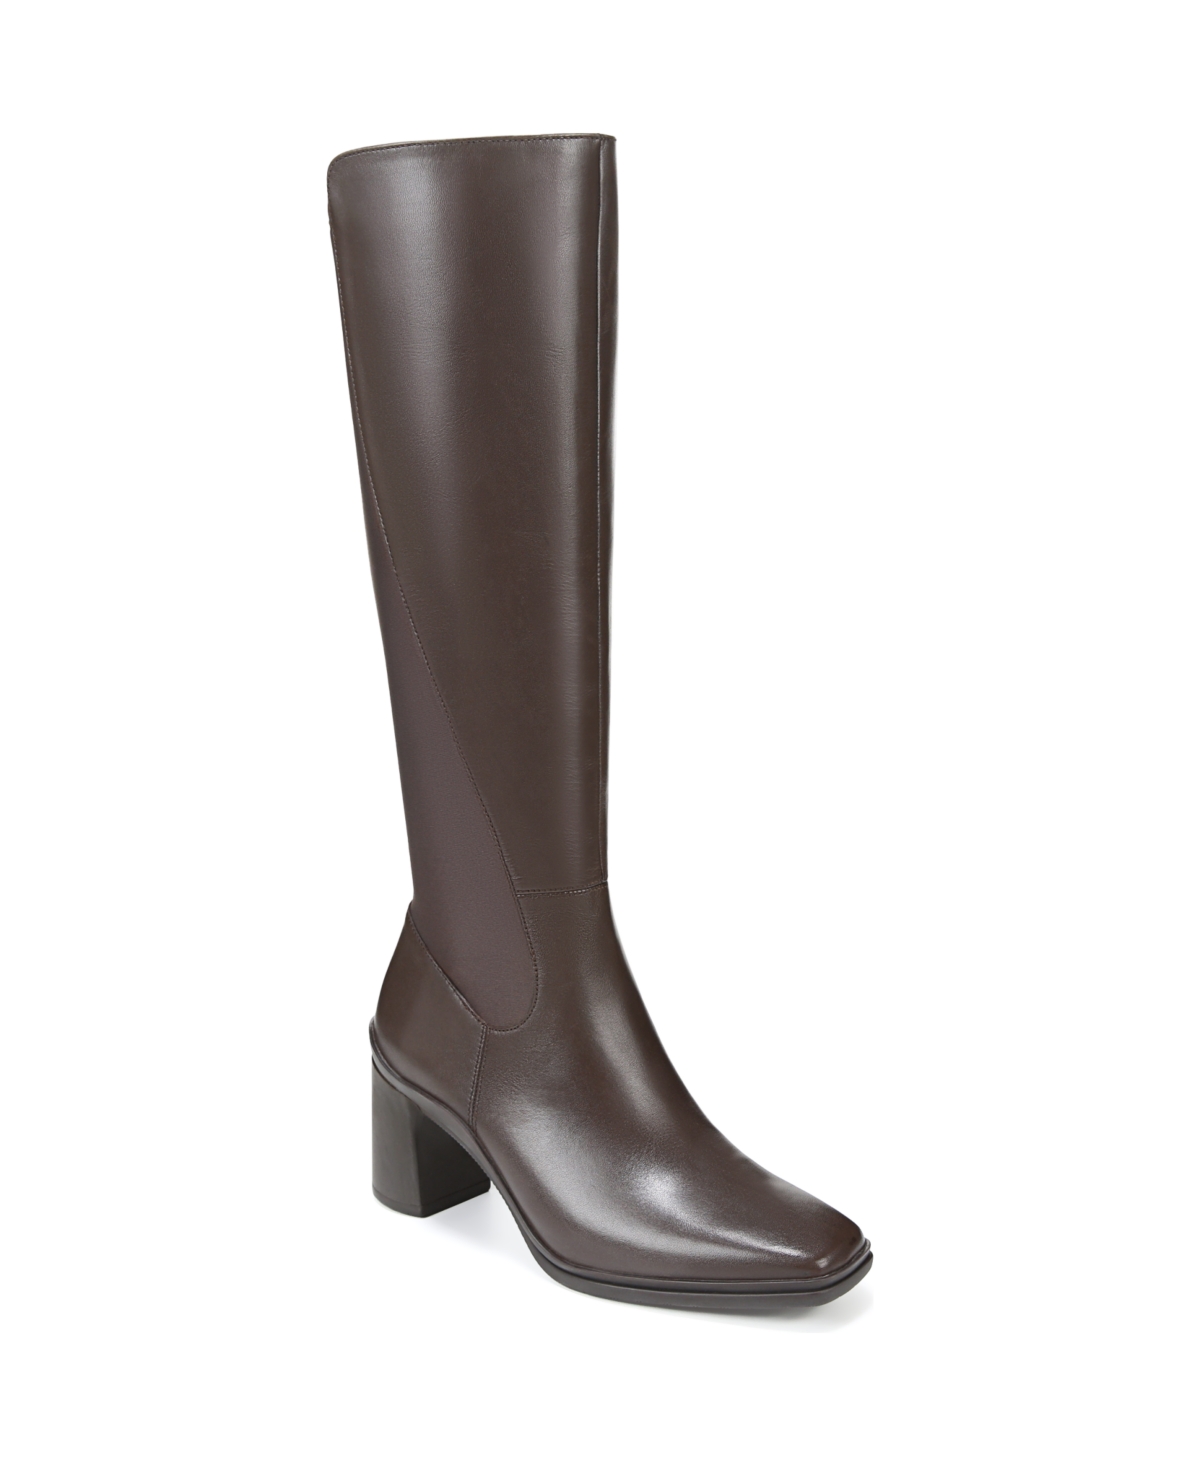 Axel 2 Waterproof High Shaft Boots - Oxford Brown Waterproof Leather